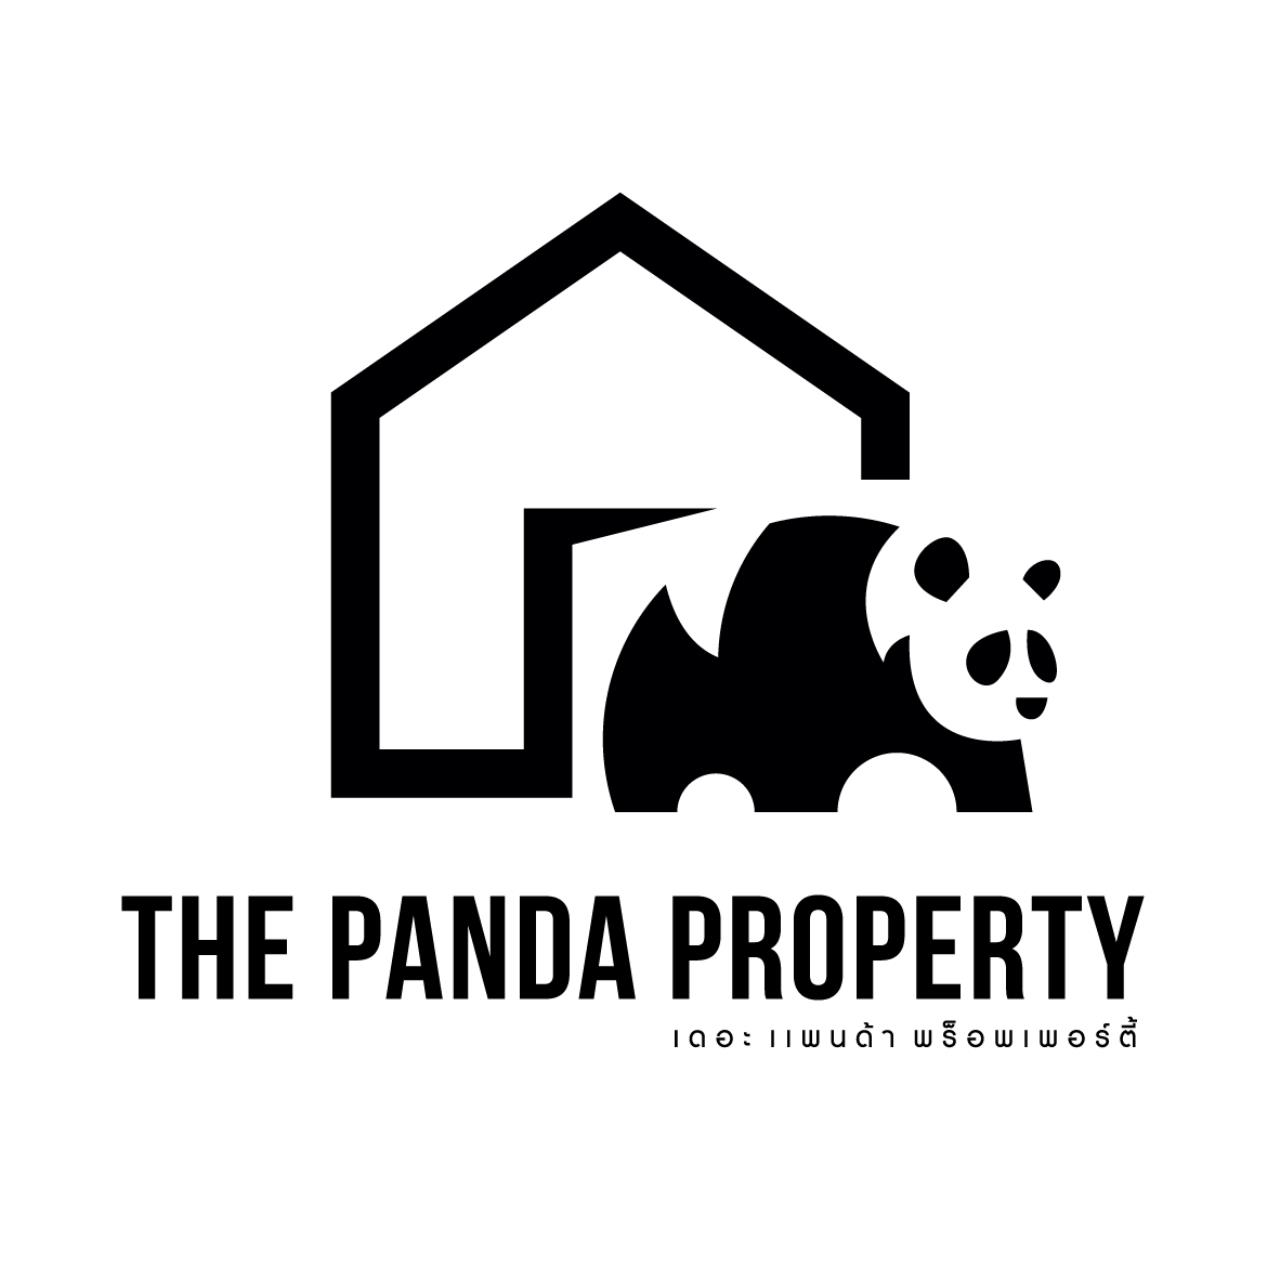 The Panda Property logo